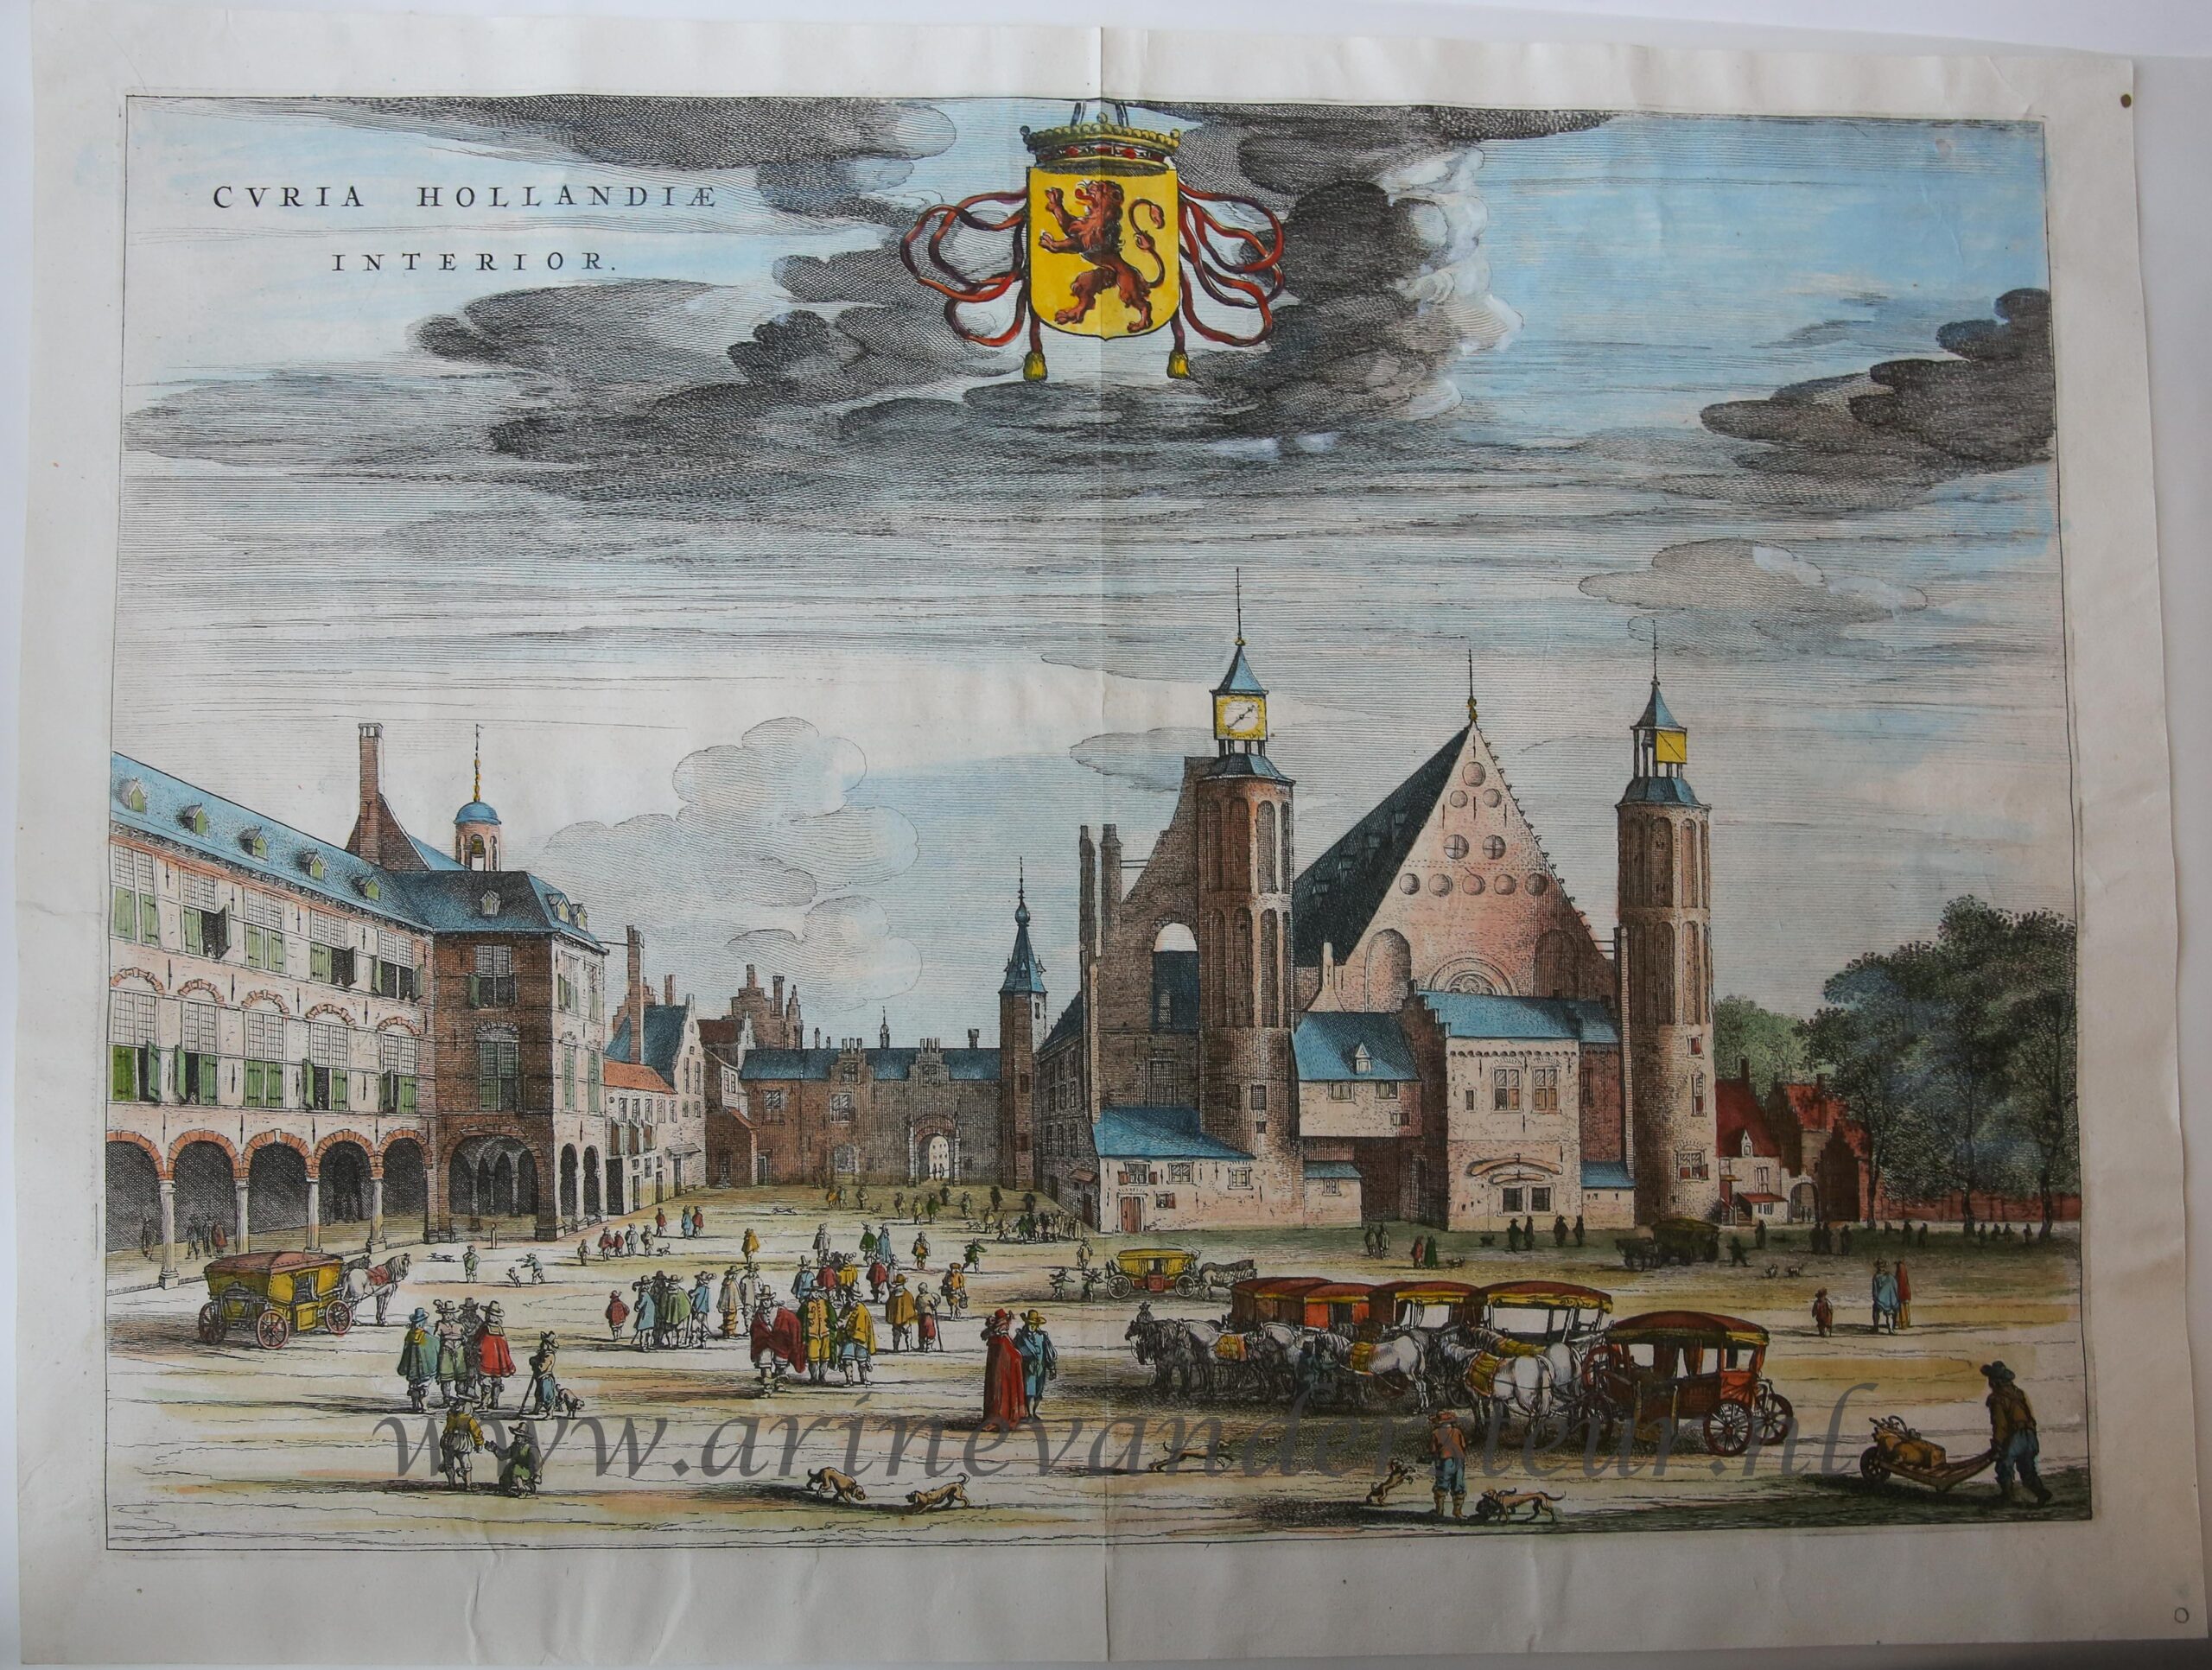 [Antique print, handcolored engraving, The Hague] CVRIA HOLLANDIAE INTERIOR (Binnenhof Den Haag), published 1649.